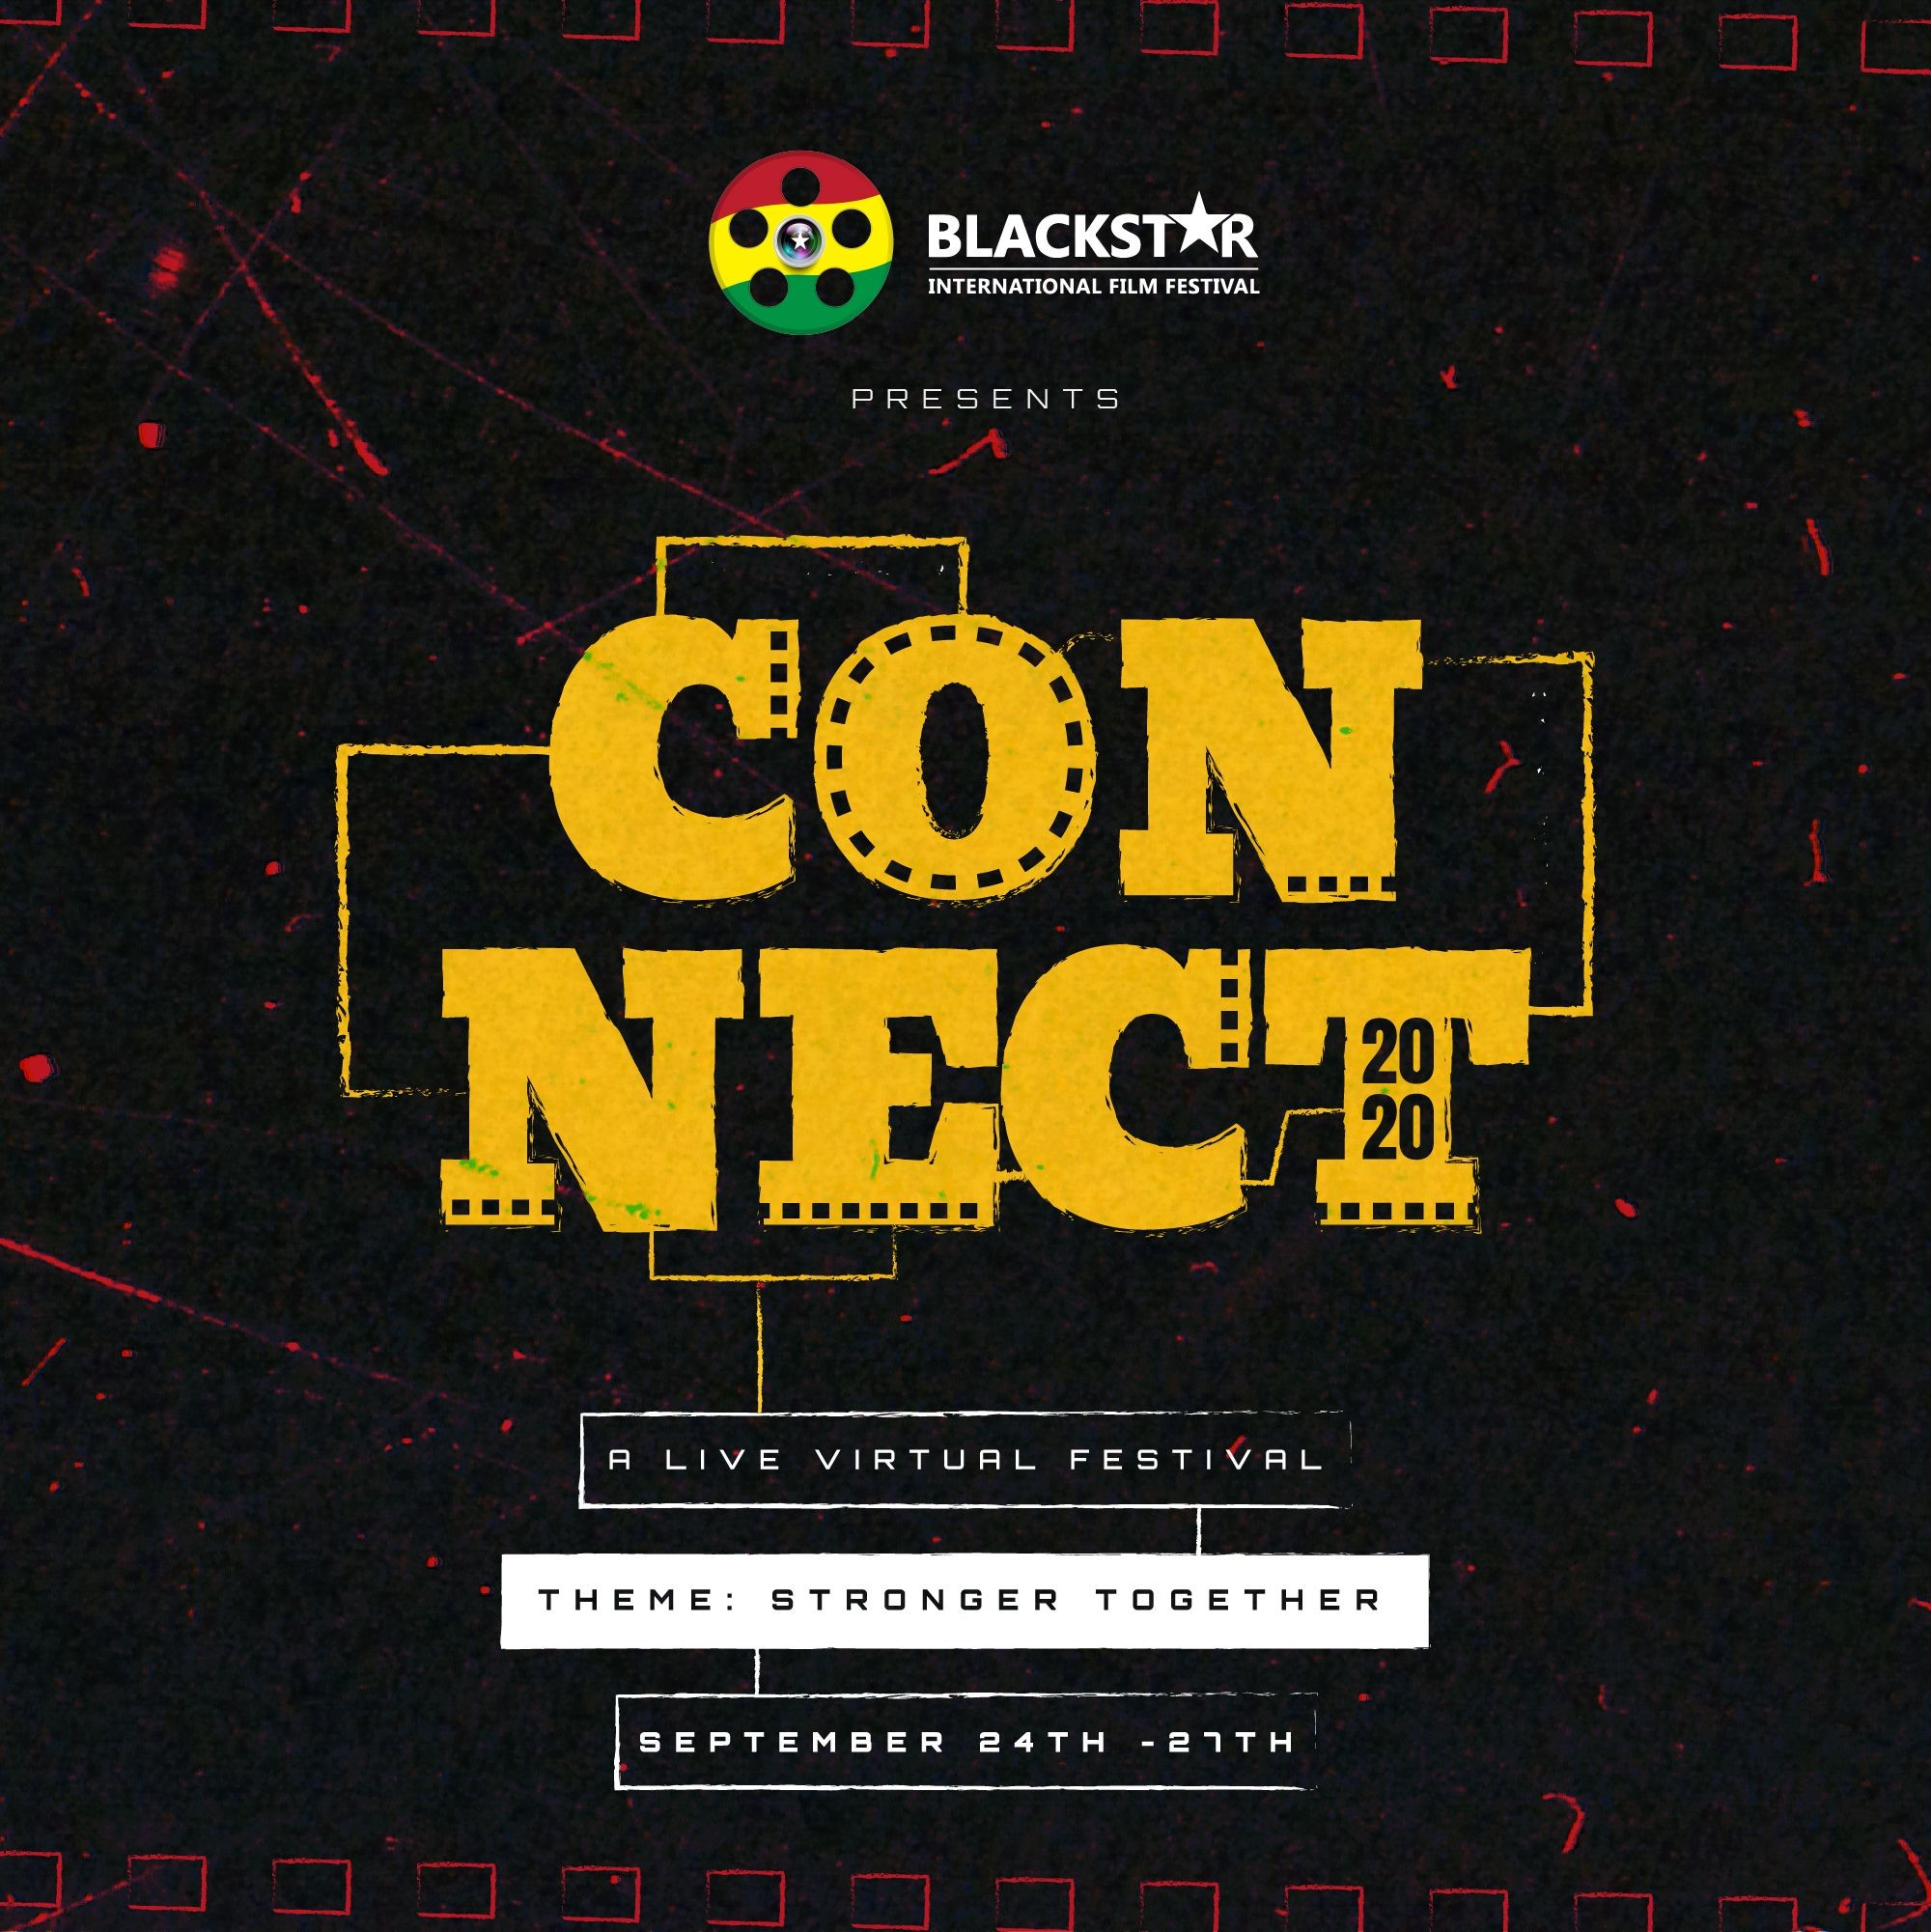 2020 Black Star International Film Festival goes virtual